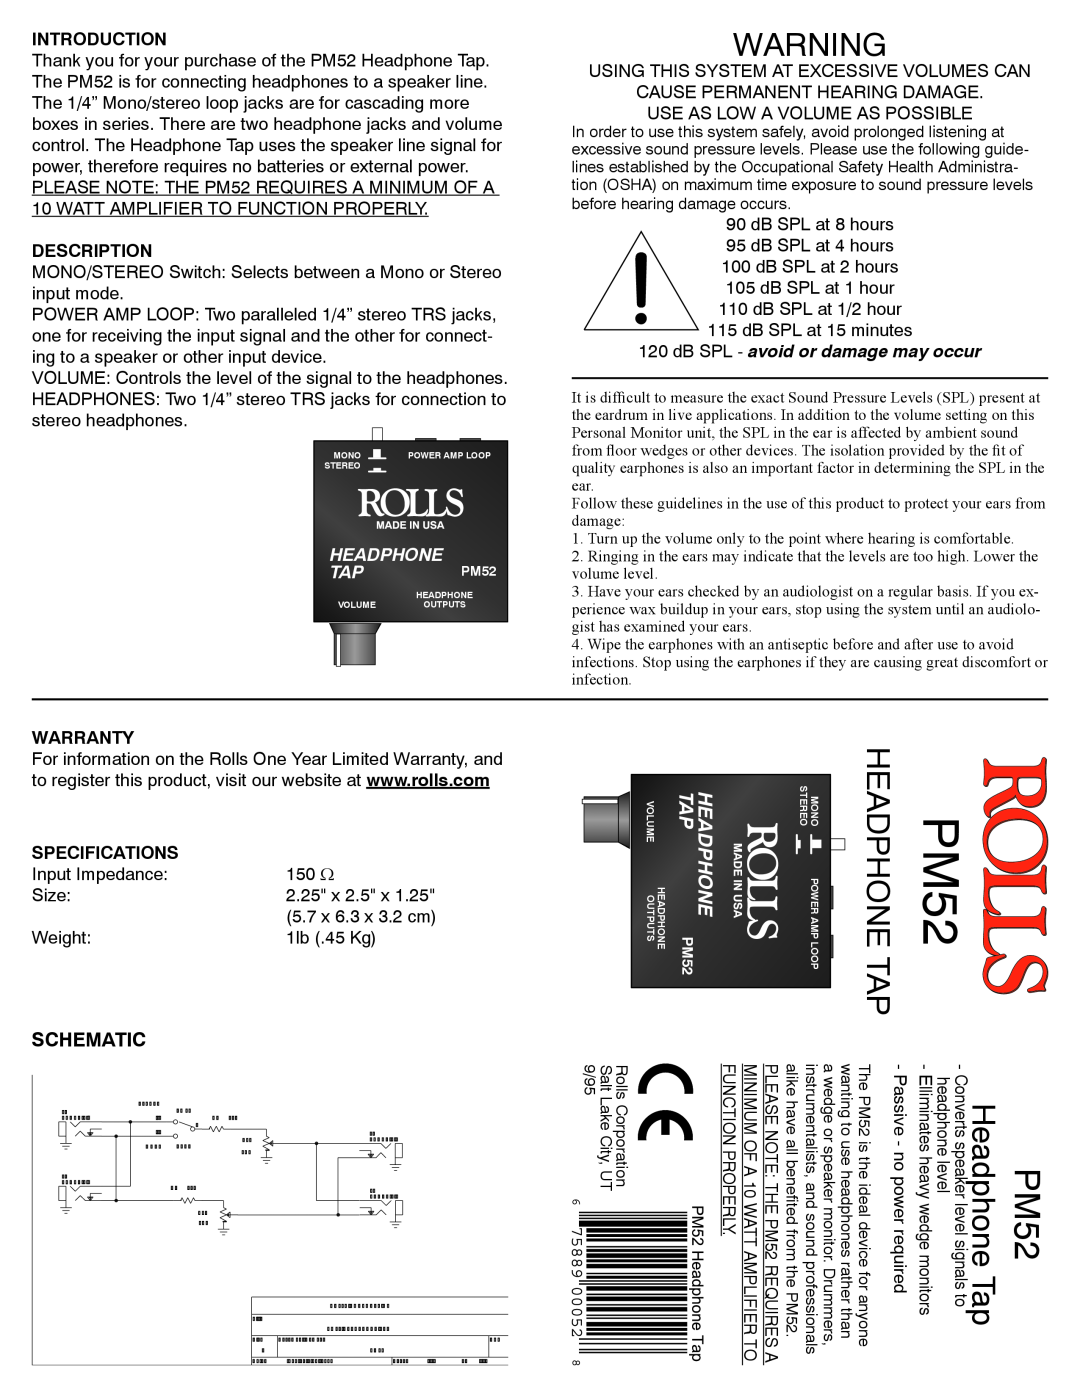 Rolls PM52 warranty Headphone Tap, Schematic, Introduction, Description, dB SPL - avoid or damage may occur, Warranty 